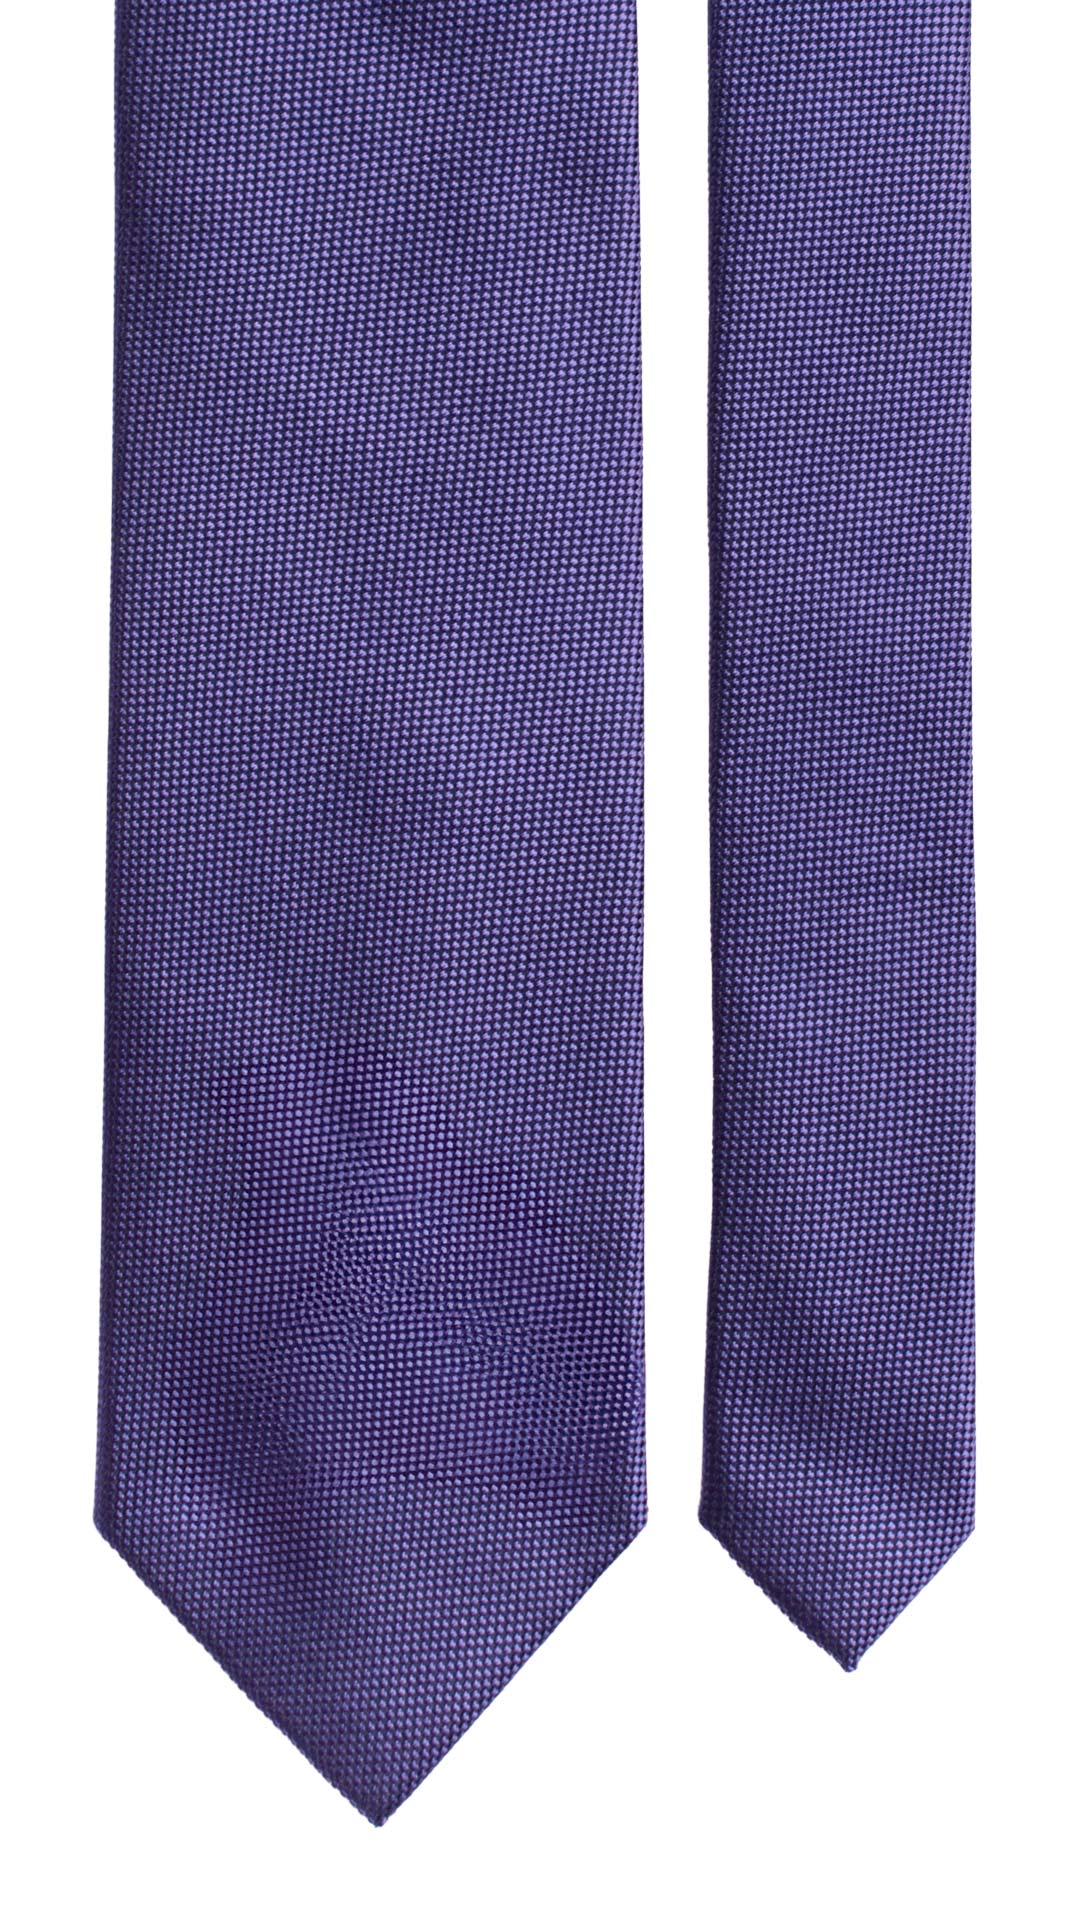 Cravatta di Seta Viola Scuro Tinta Unita 7029 Pala